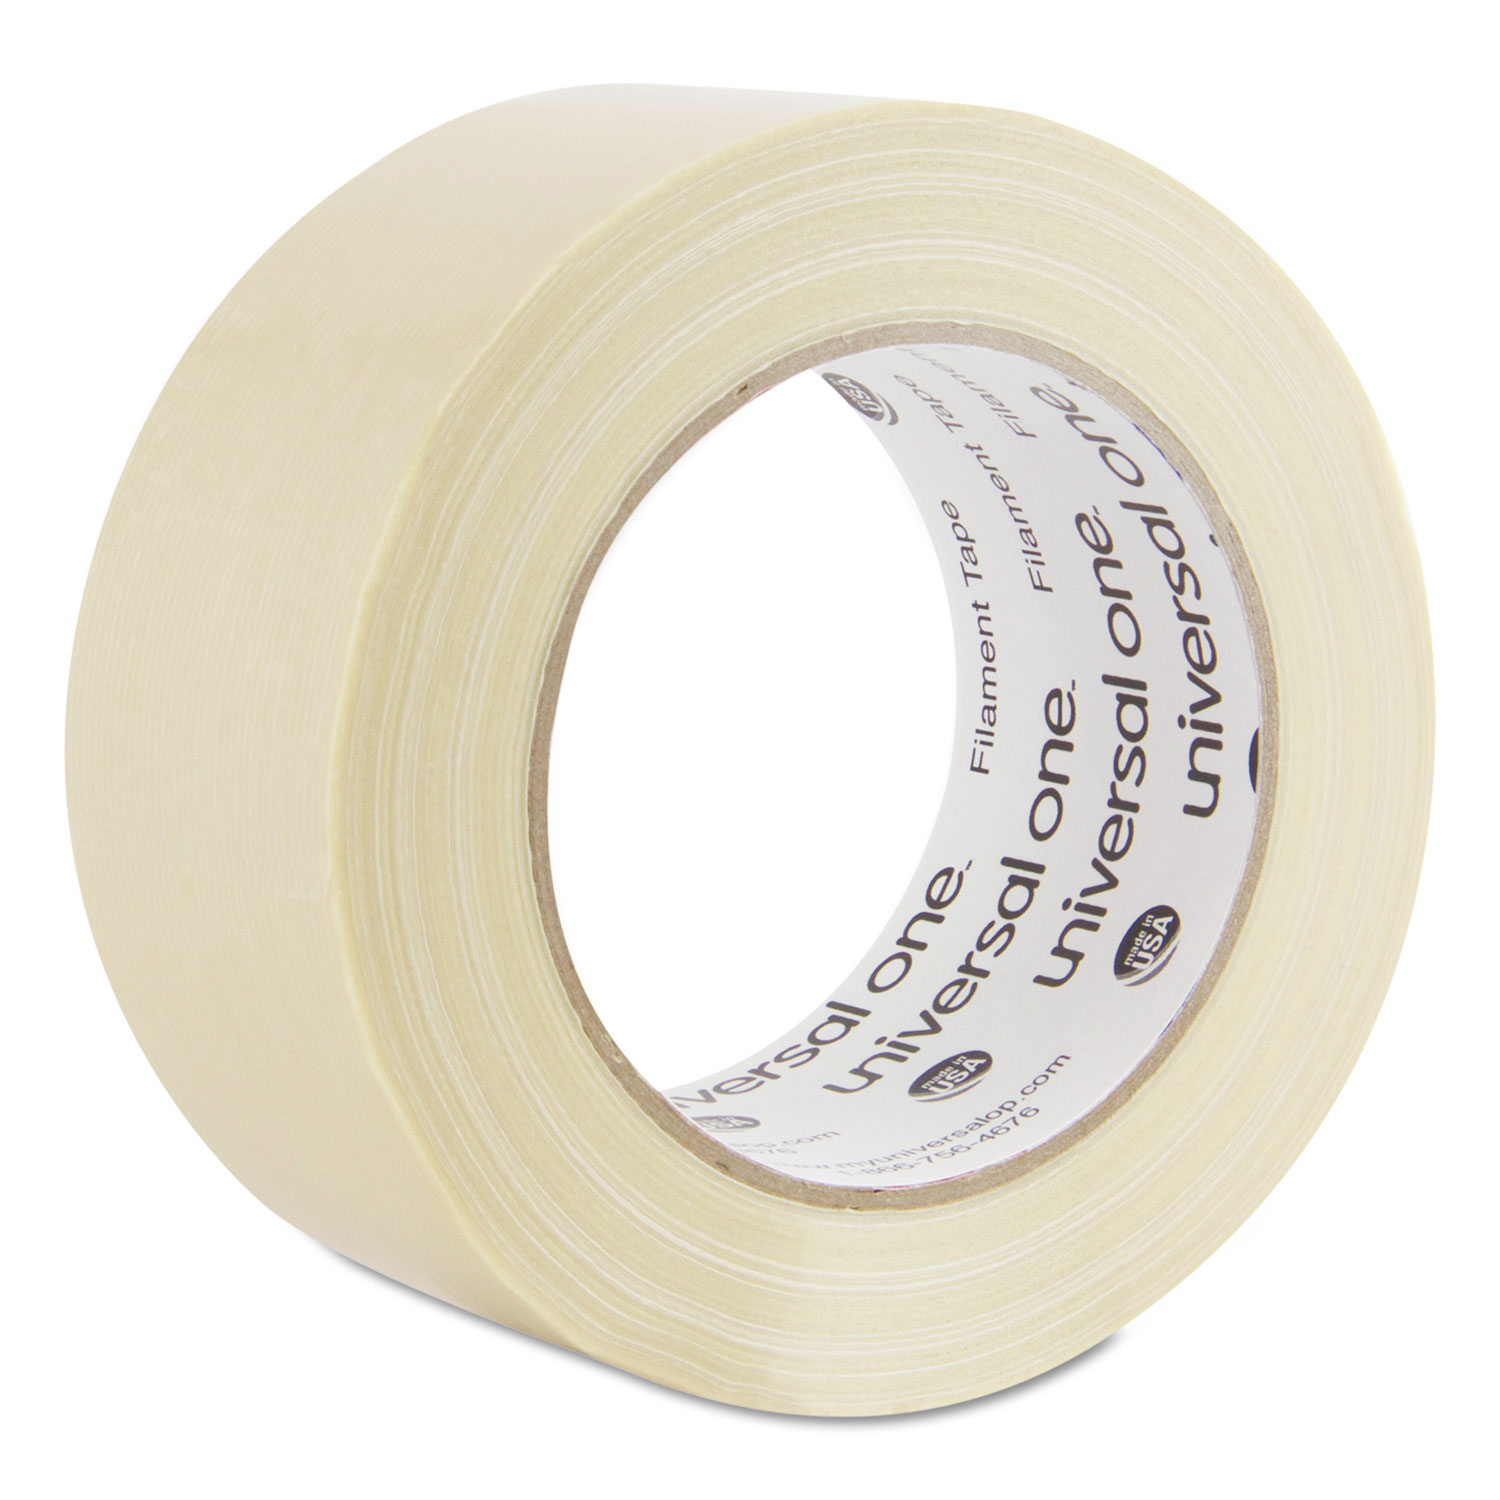 Premium-Grade Filament Tape w/Natural Rubber Adhesive, 48mm x 54.8m, Clear